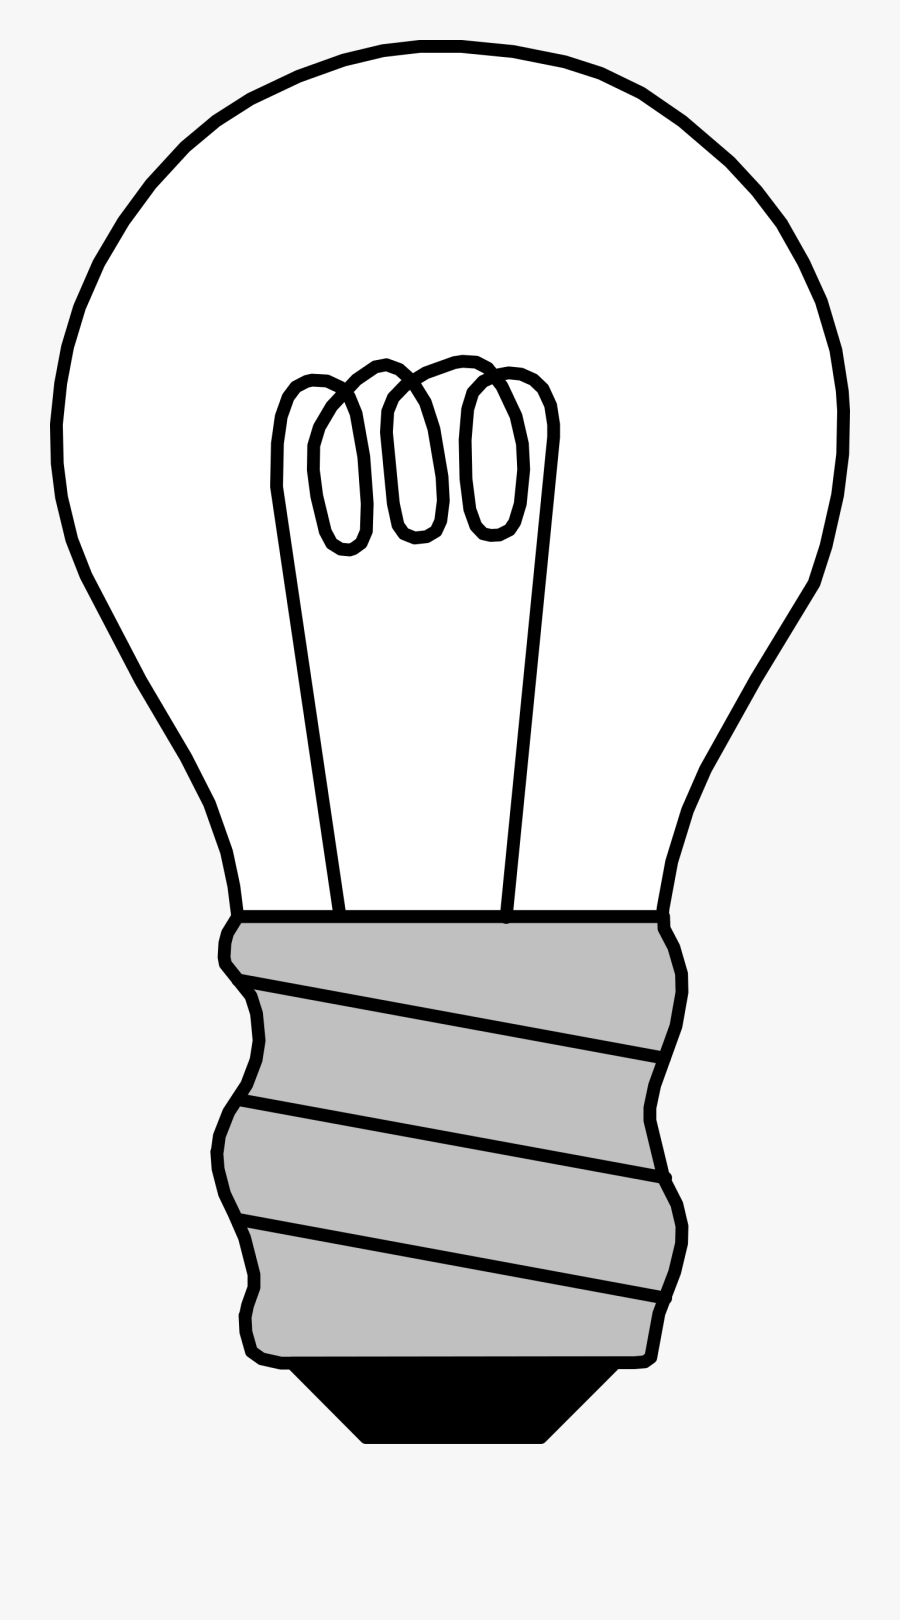 Drawn Bulb Coloring Page - Clip Art Light Bulb Off, Transparent Clipart